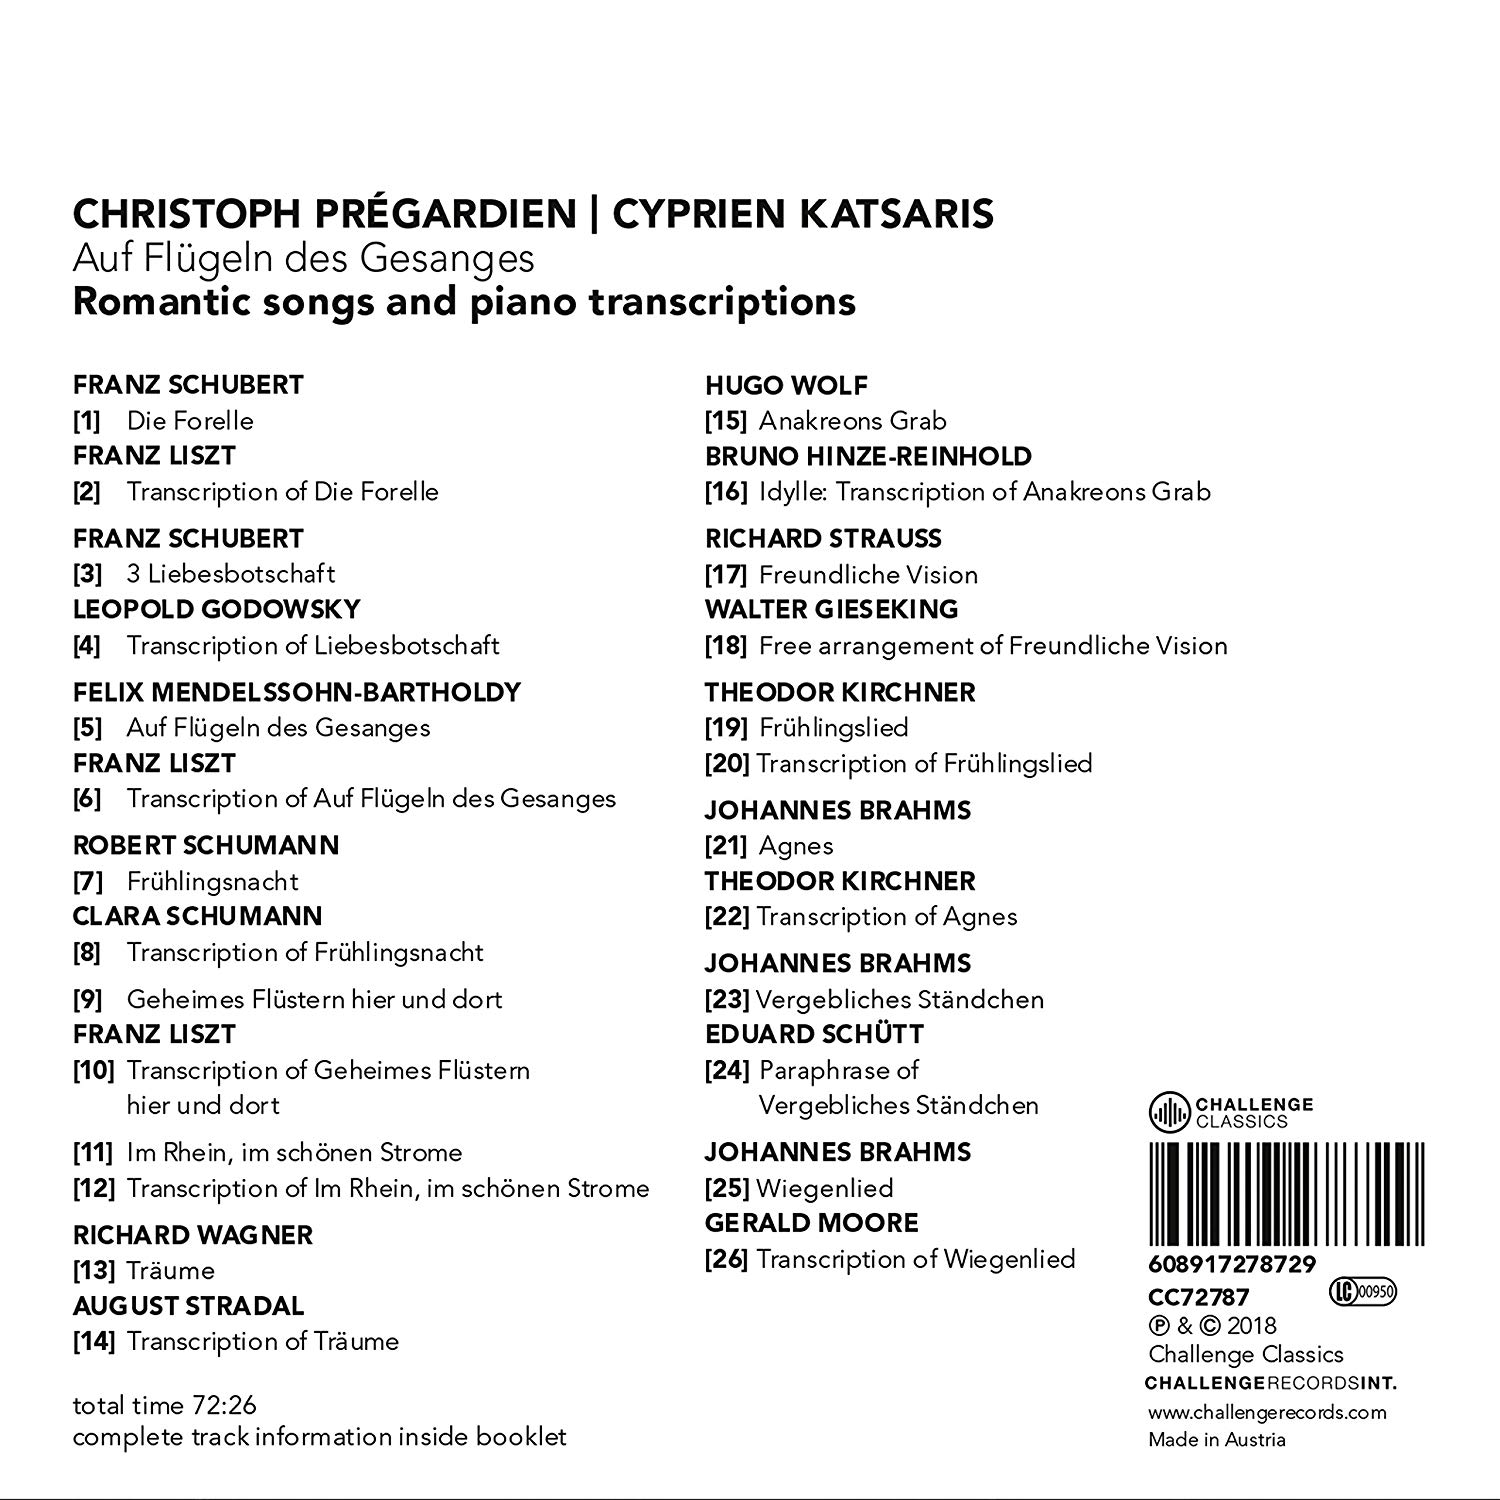 Christoph Pregardien / Cyprien Katsaris 낭만주의 가곡과 피아노 편곡집 (Auf Flugeln des Gesanges - Romantic Songs & Transcriptions)